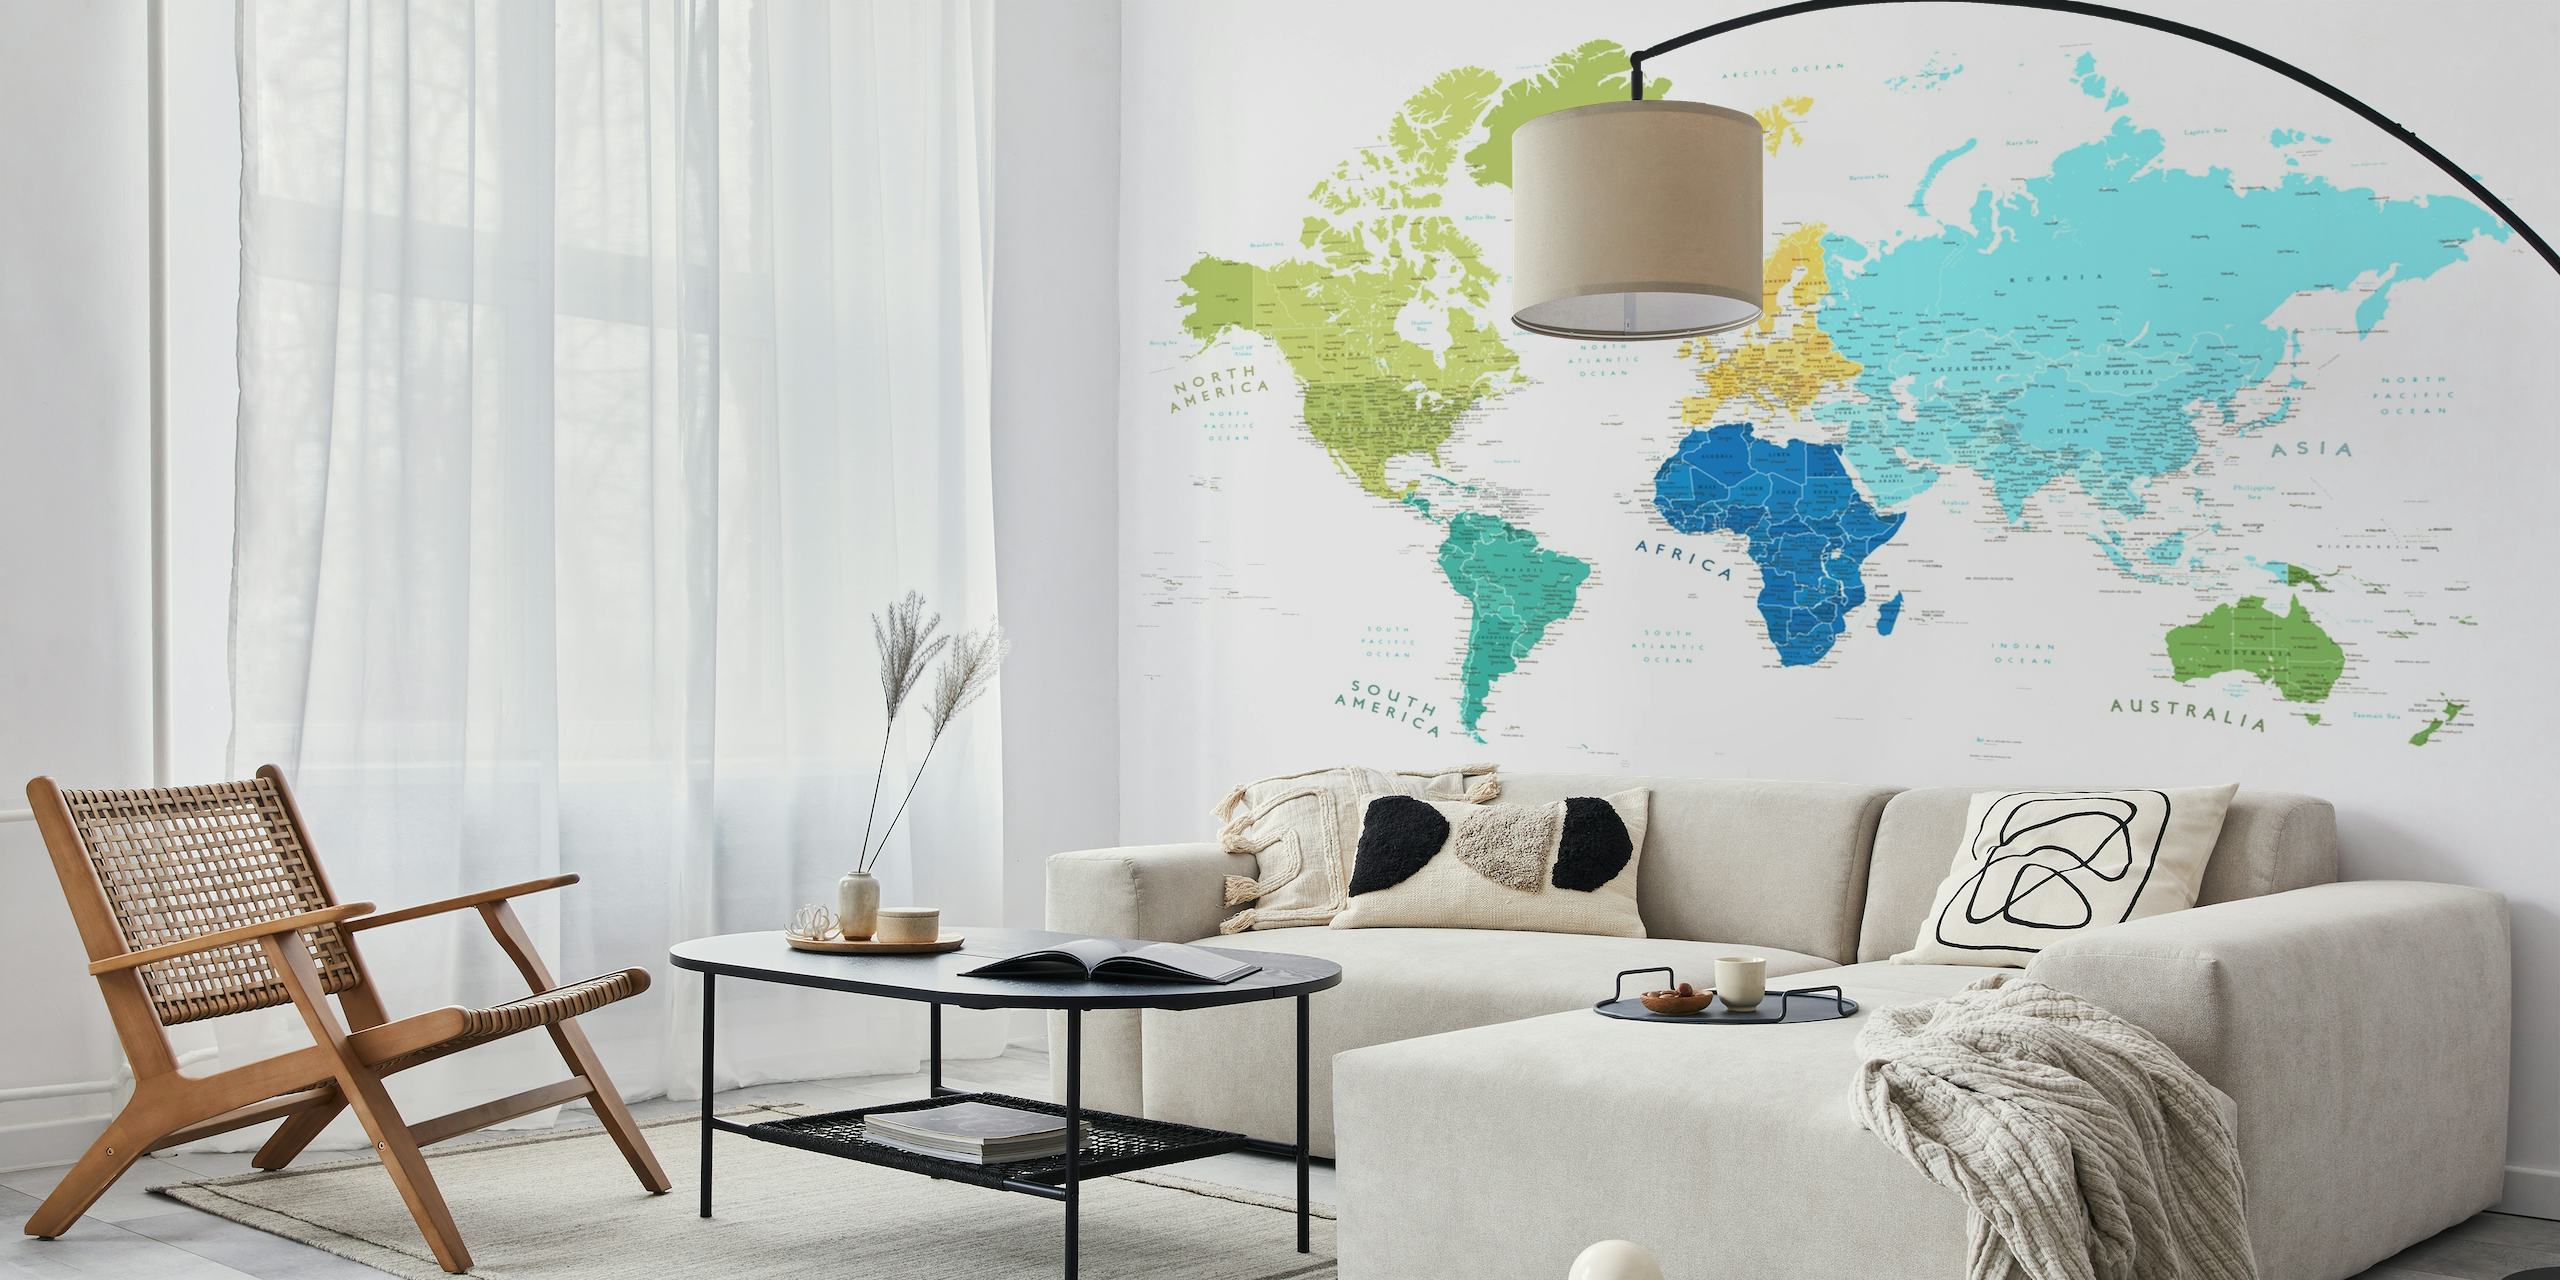 Colorido mural de pared con un mapa mundial que destaca la Antártida con colores distintos para cada continente